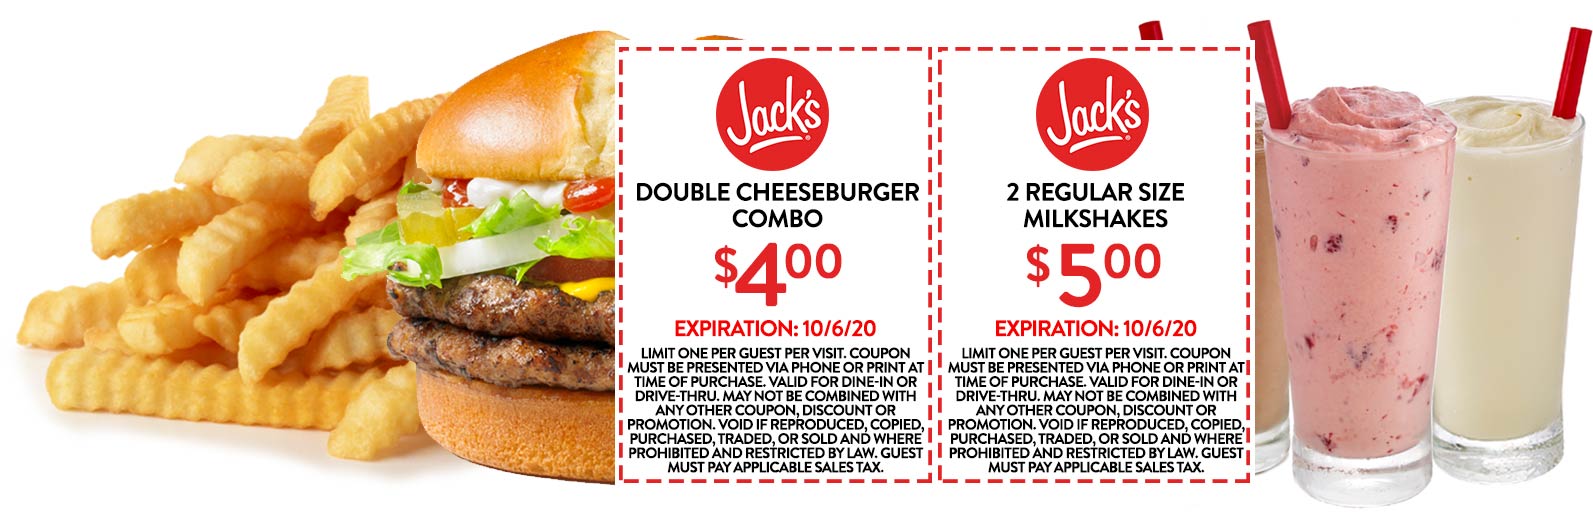 Jacks restaurants Coupon  $4 double cheeseburger combo meal & more at Jacks #jacks 